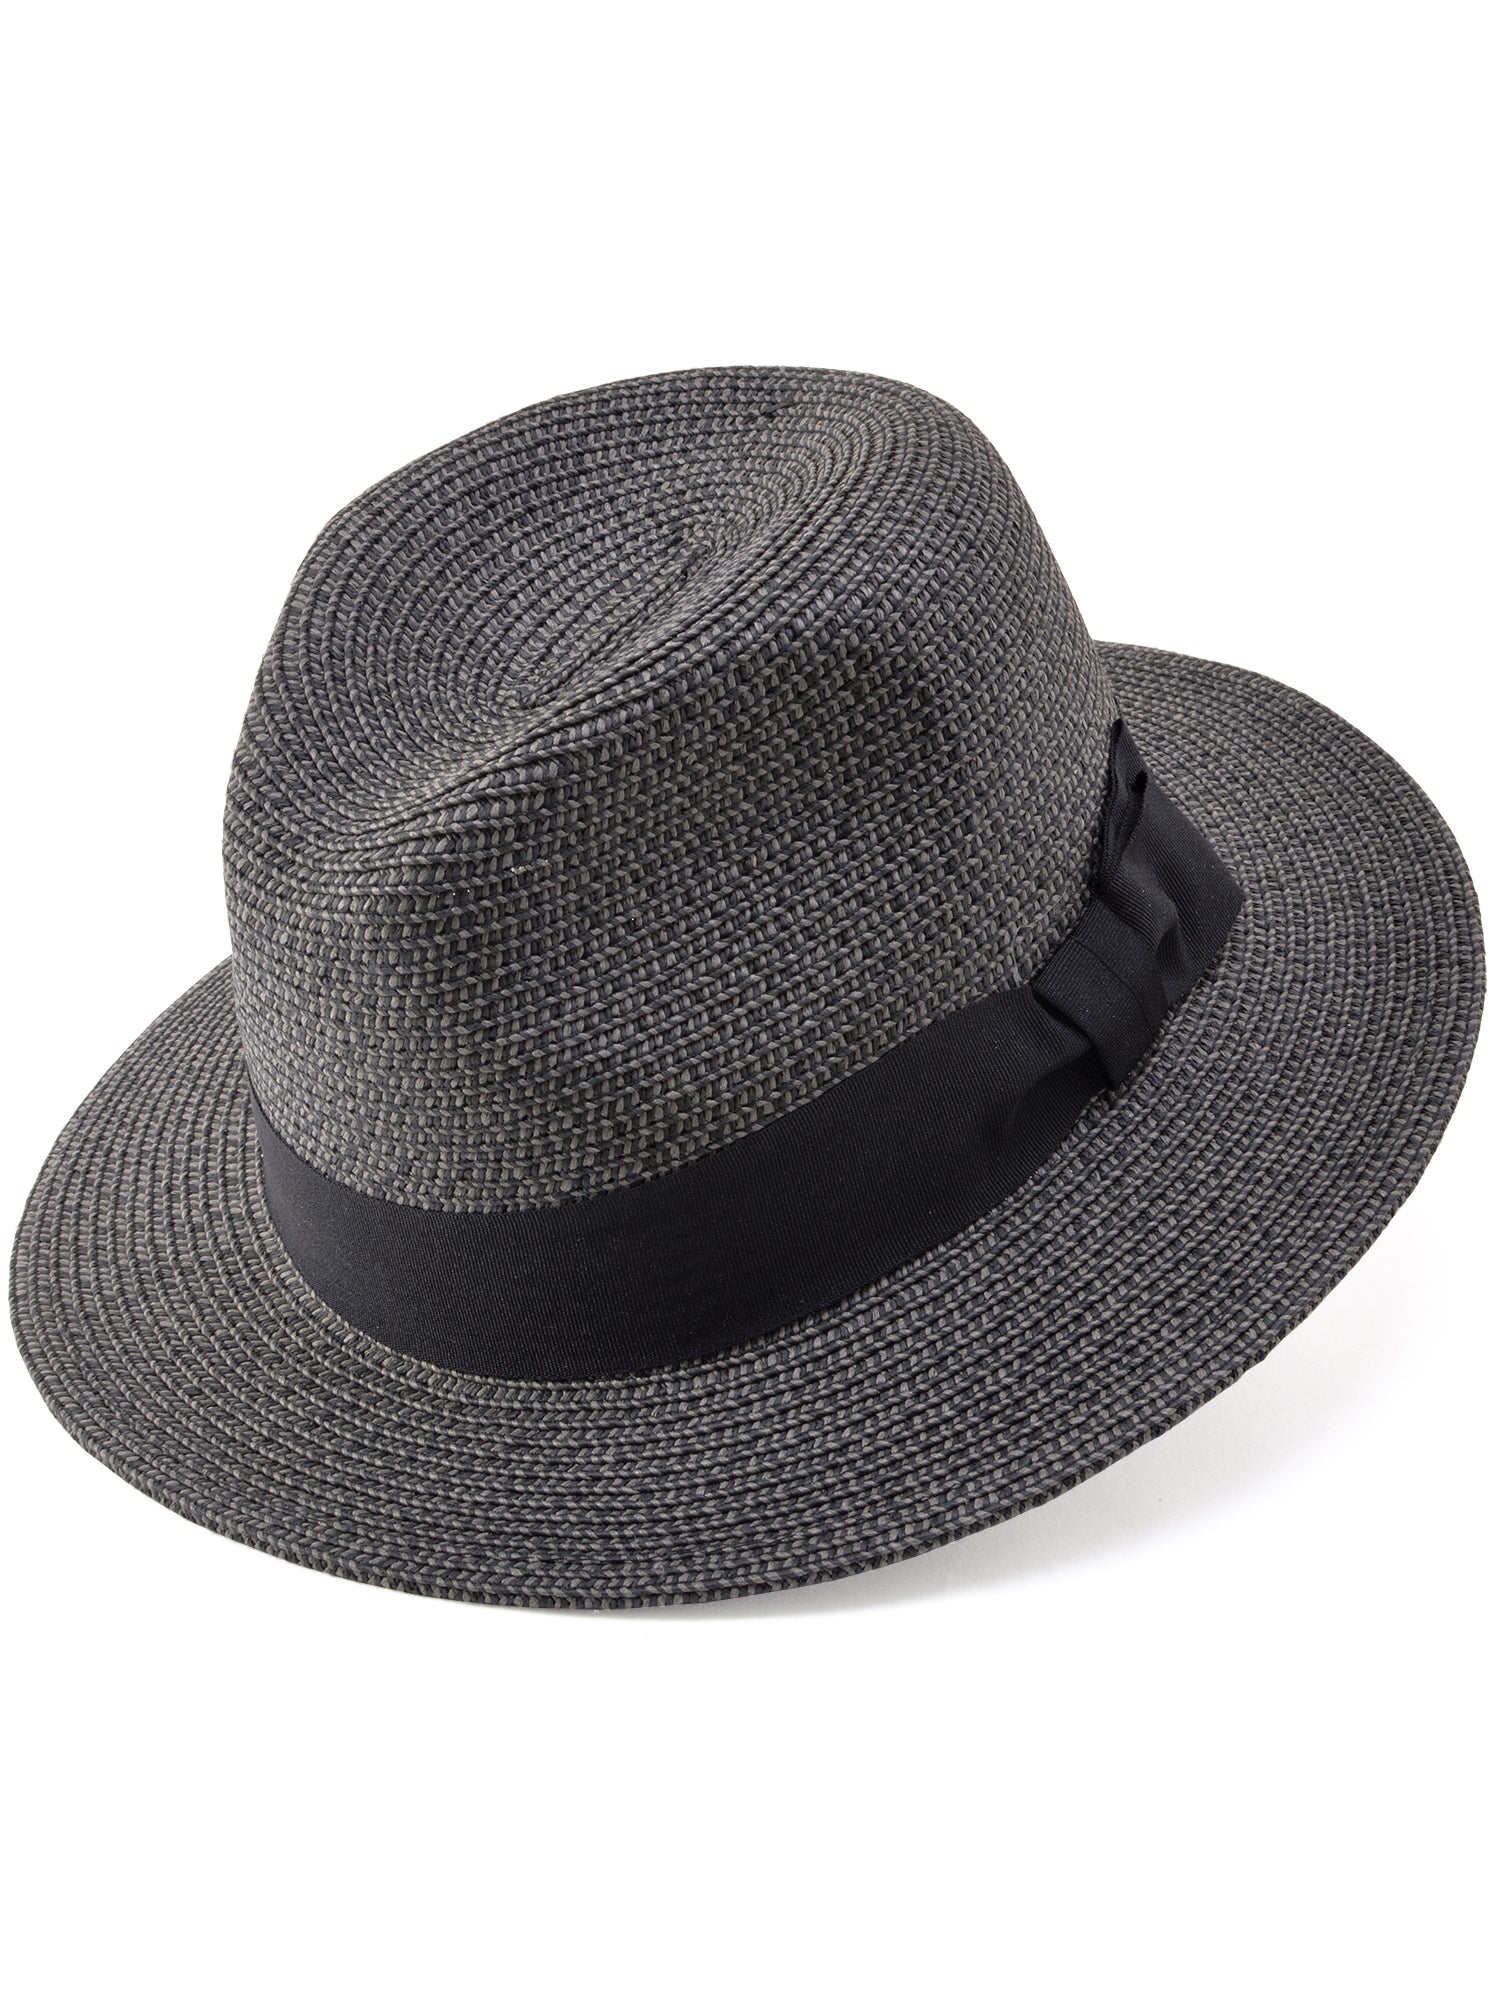 Broner 'Suitable' Marled Paper Hat in Black